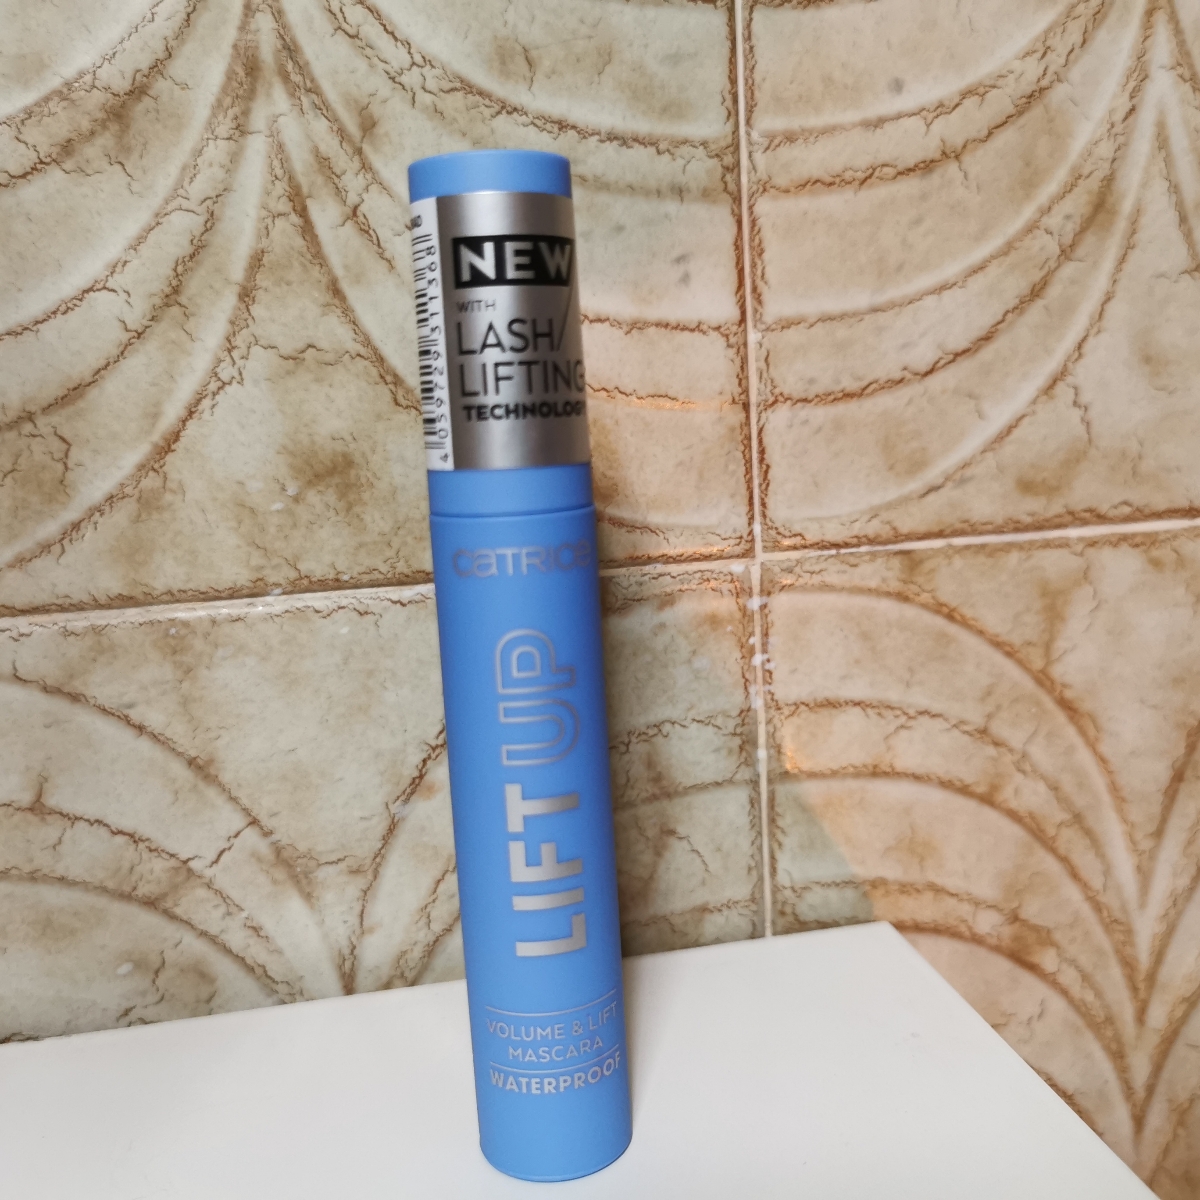 Catrice Cosmetics LIFT UP Volume & Lift Mascara Waterproof Review | abillion